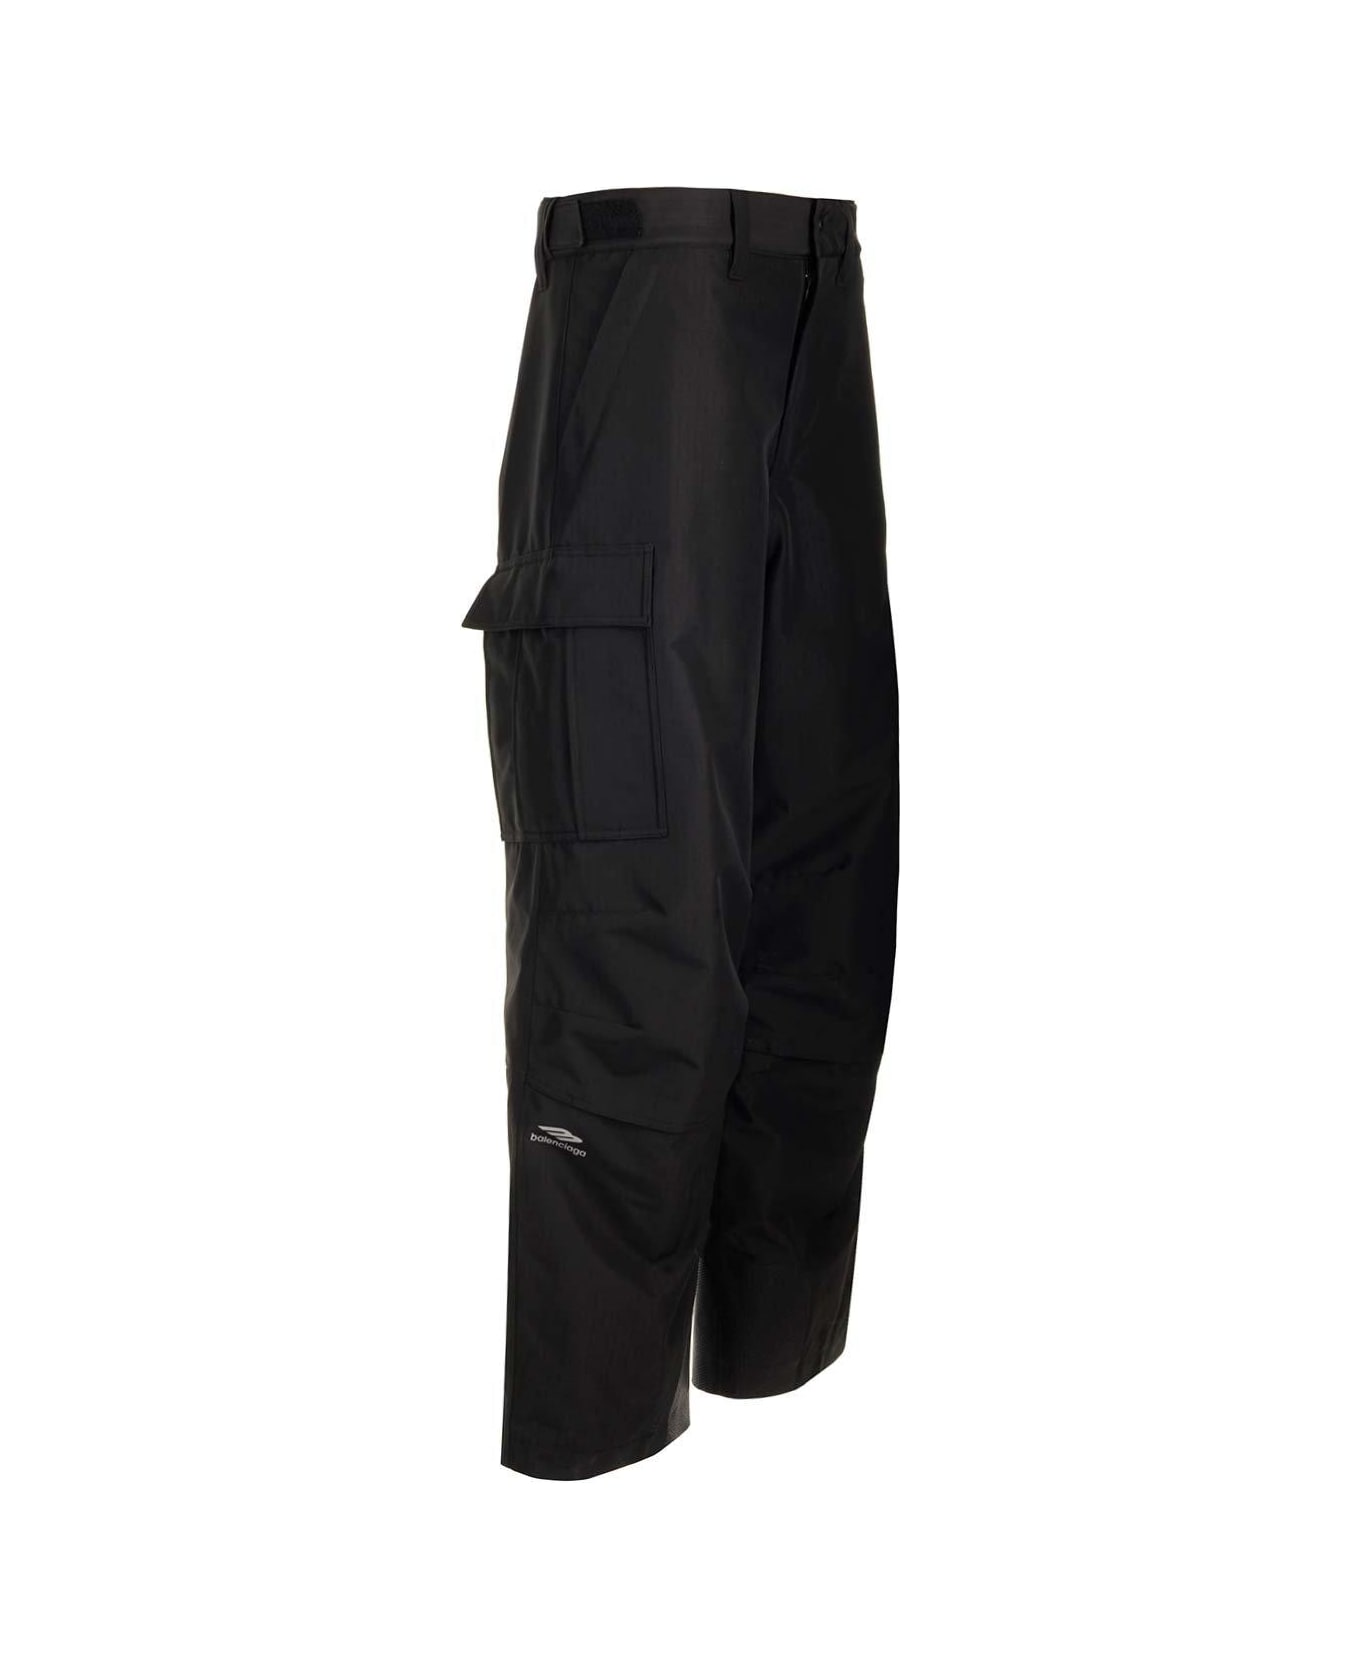 Balenciaga 3b Sports Icon Ski Cargo Pants - Black ボトムス